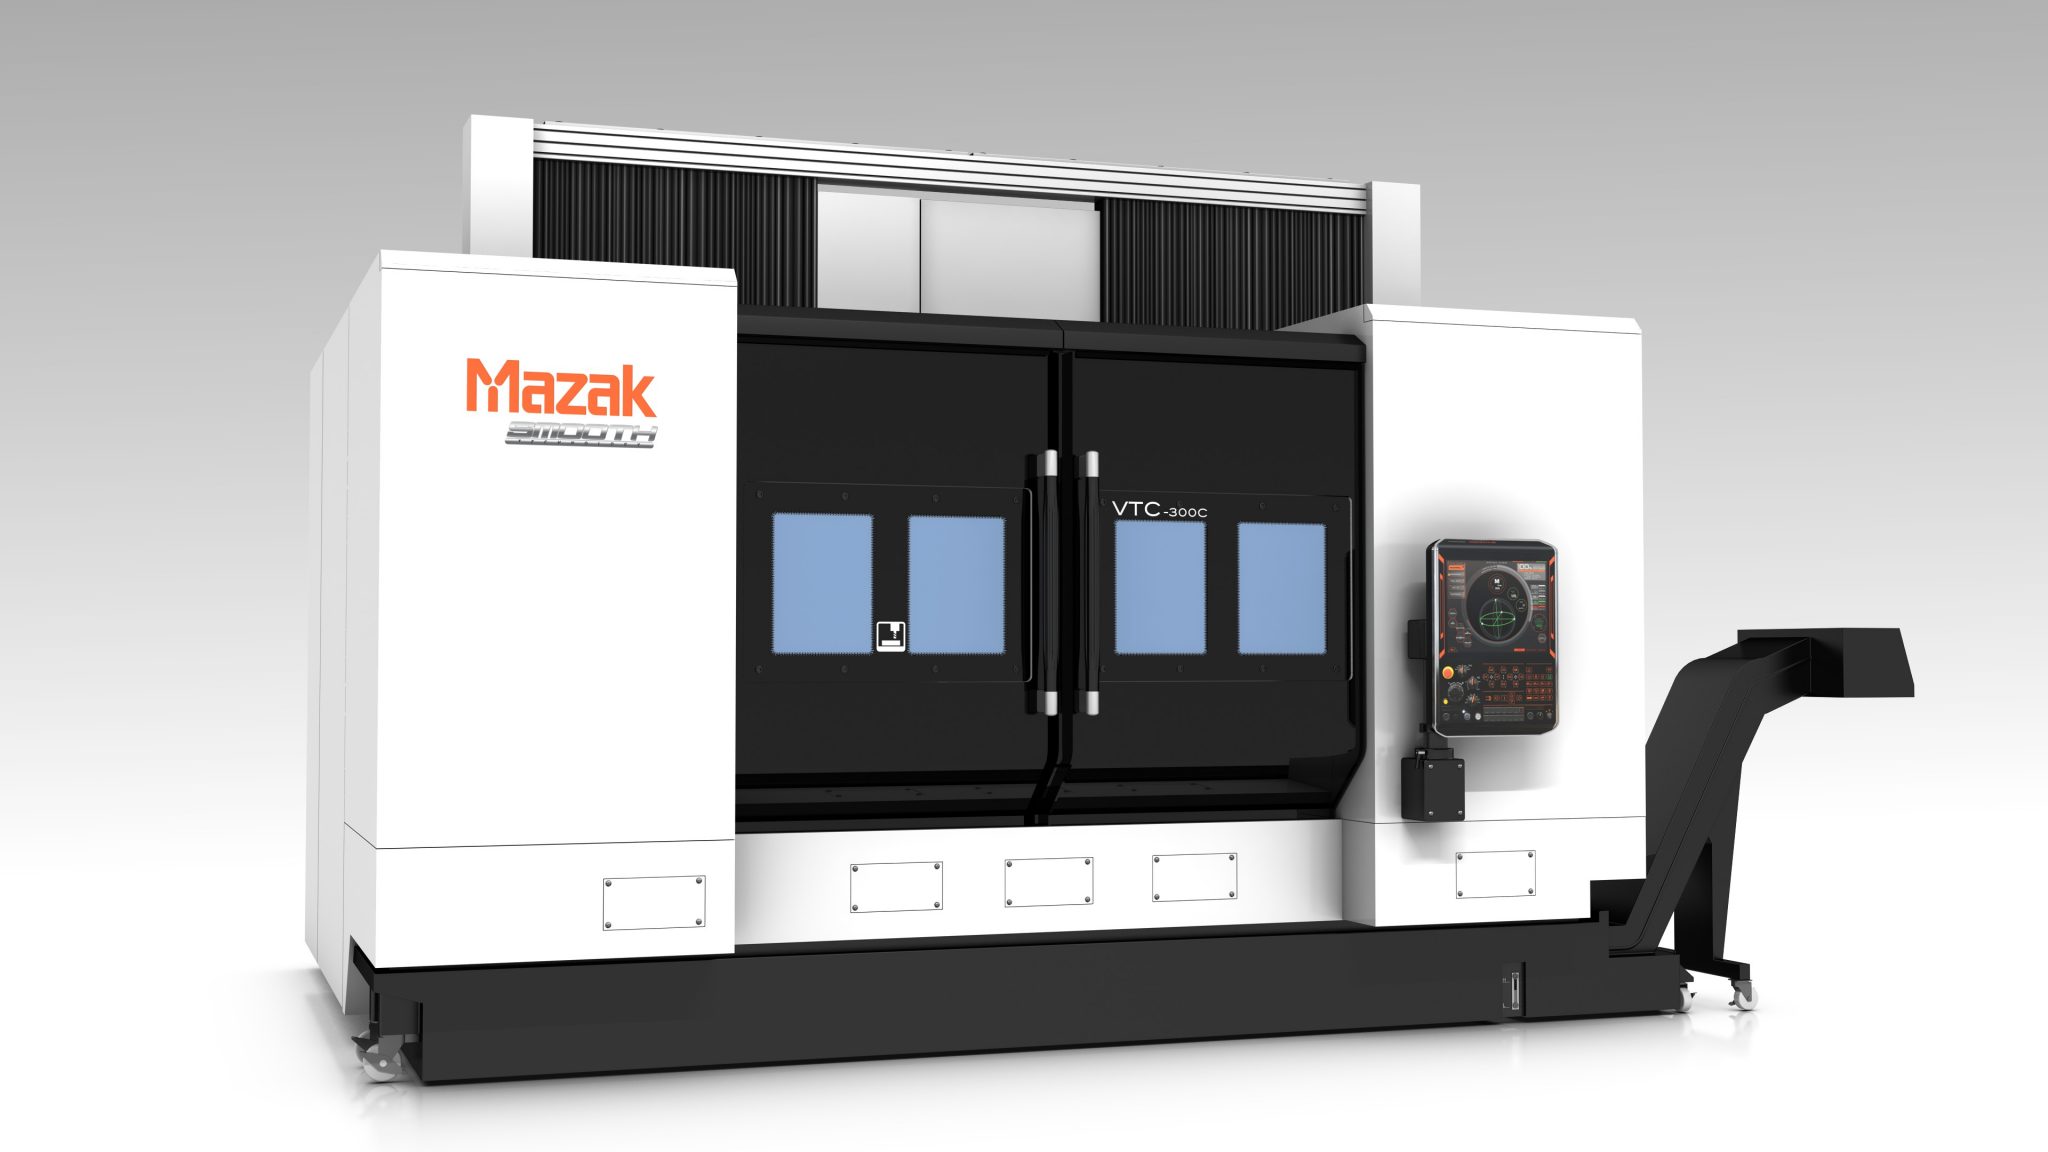 Mazak Showcases Large Part Production and Advanced CNCs at WMTS